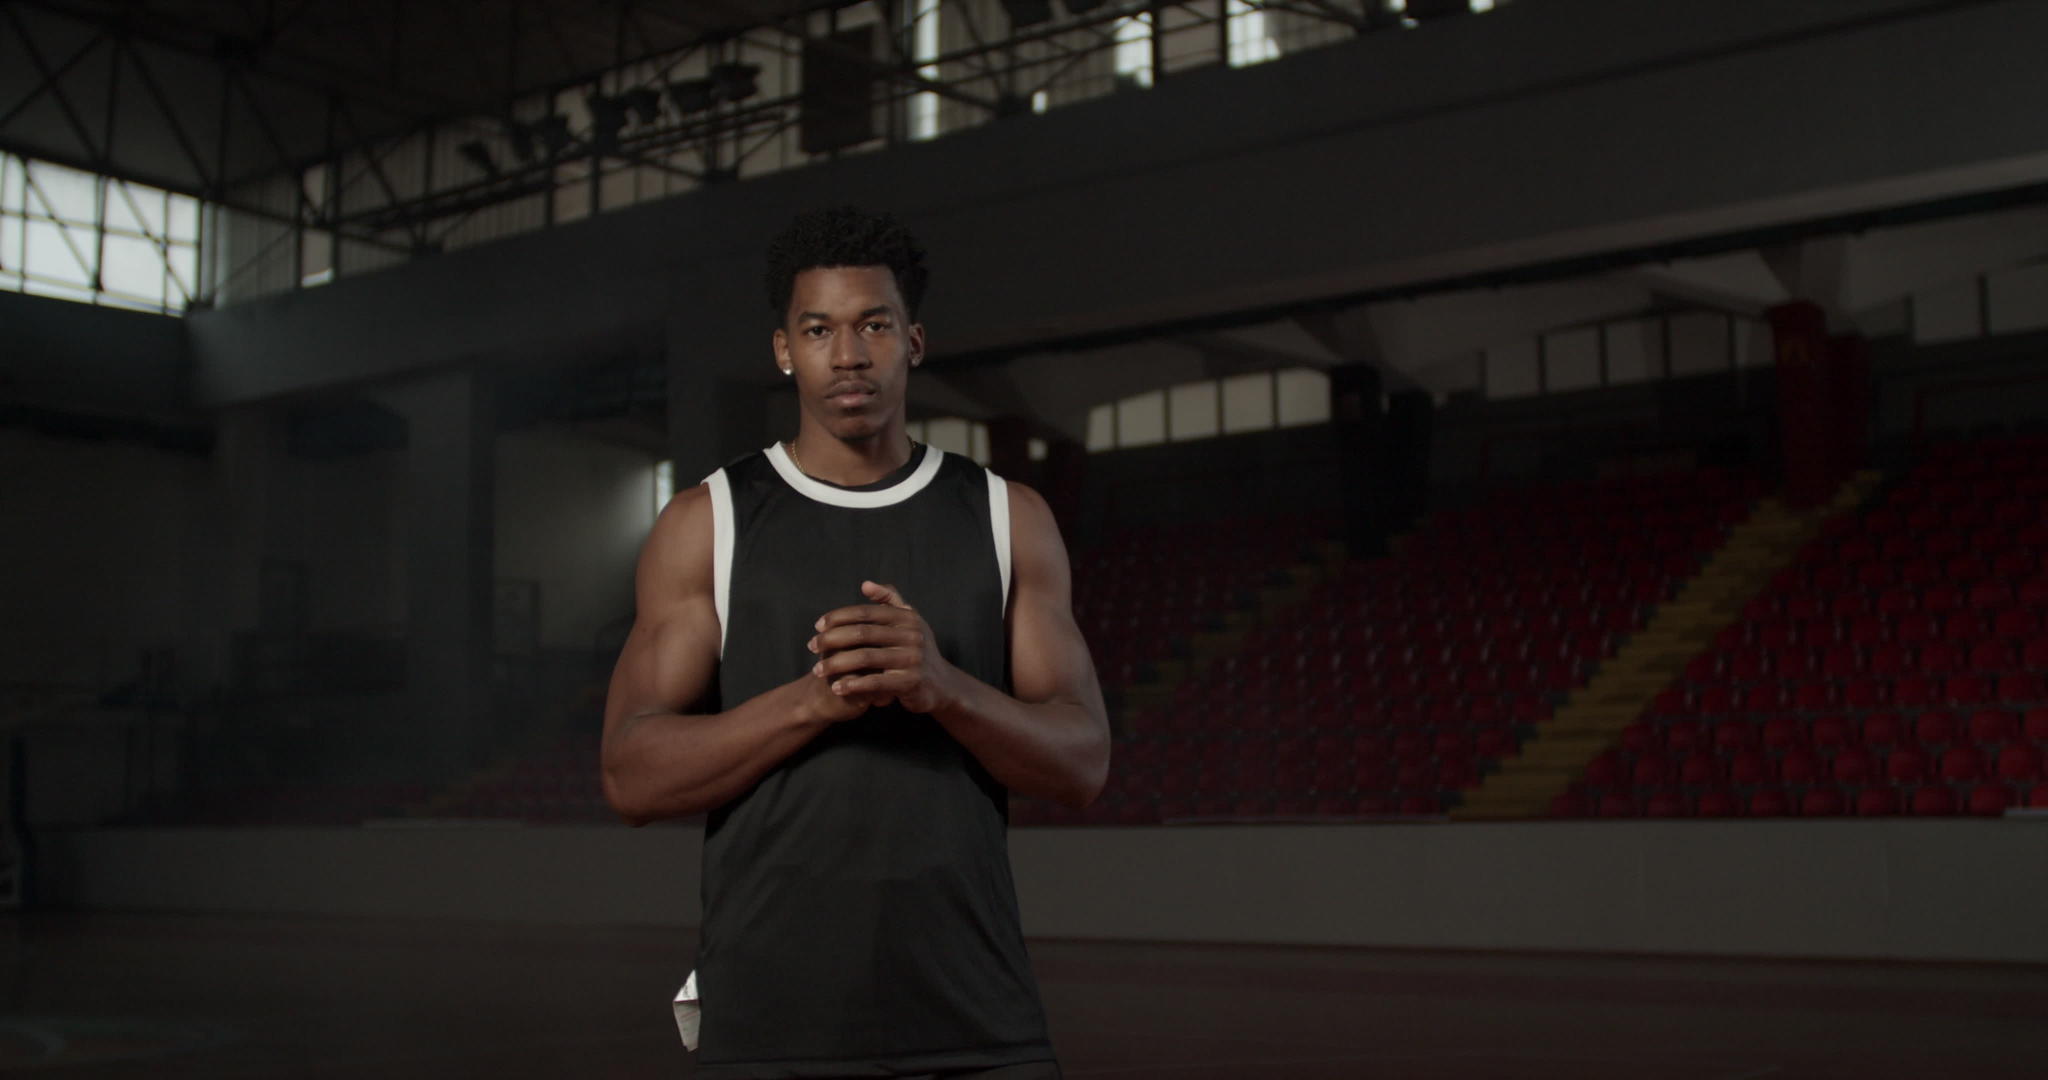 African穿制服的美国男子在体育馆摆姿势视频的预览图